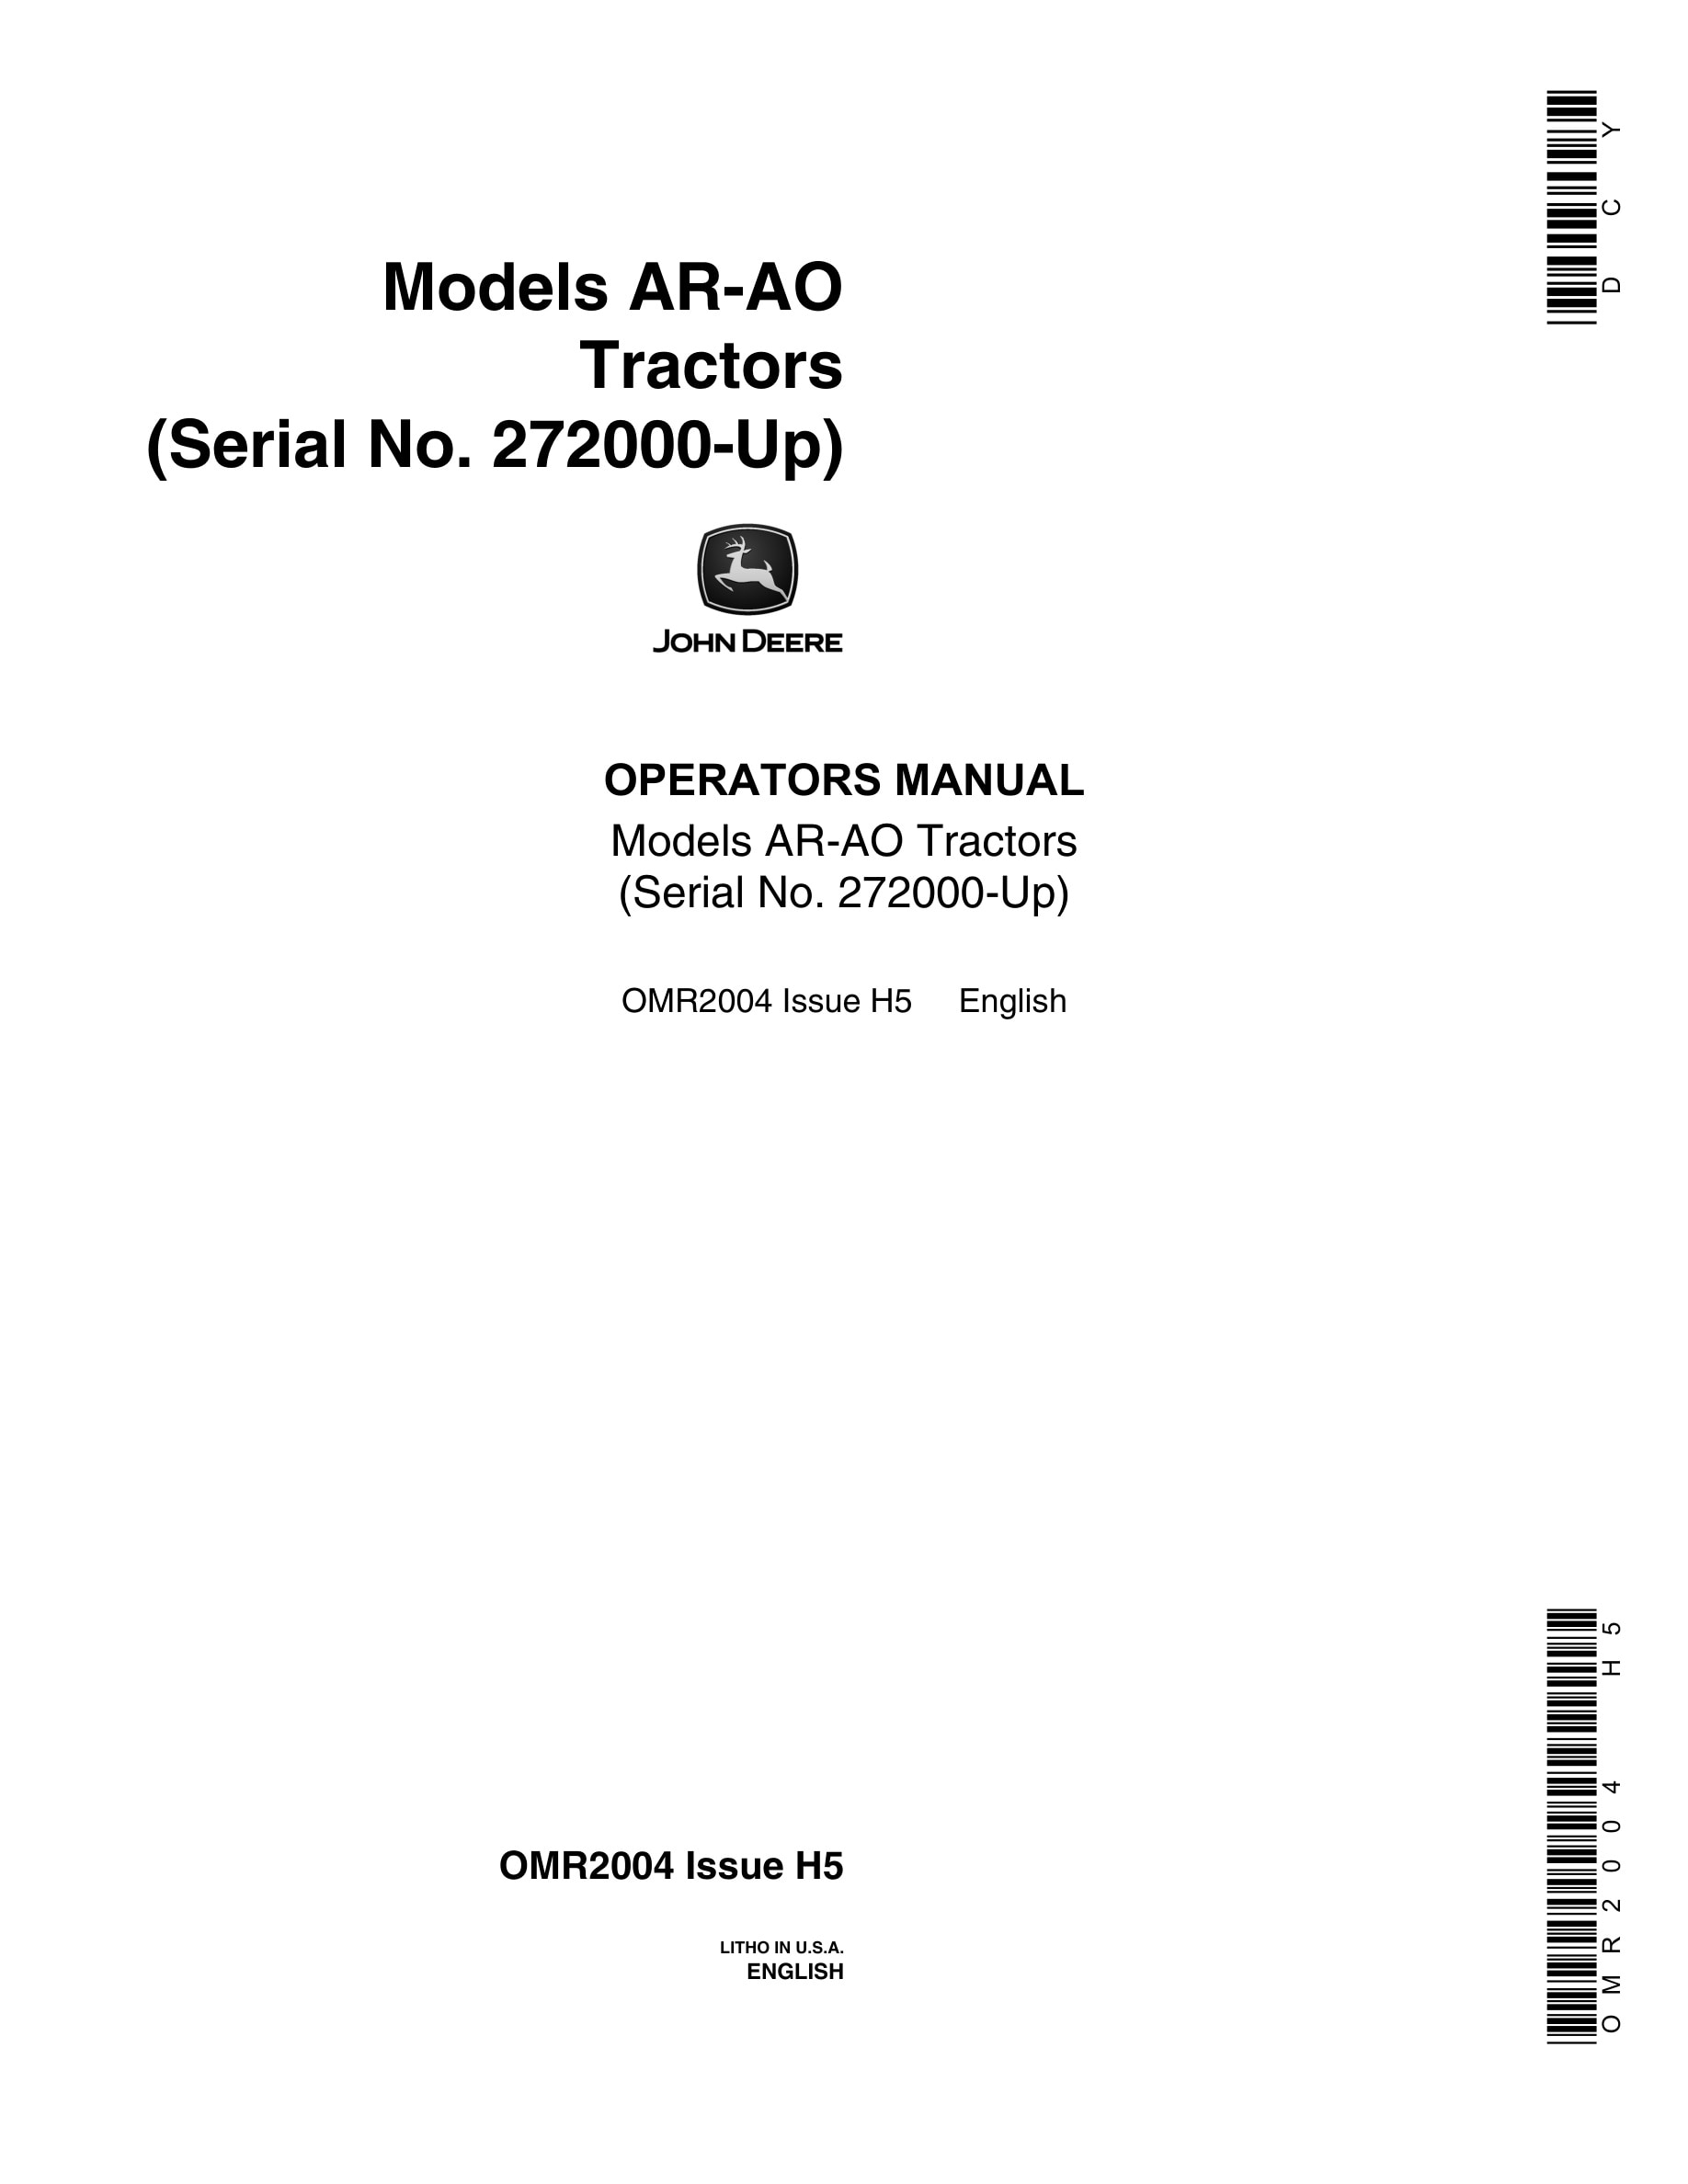 John Deere AR-AO Tractor Operator Manual OMR2004-1